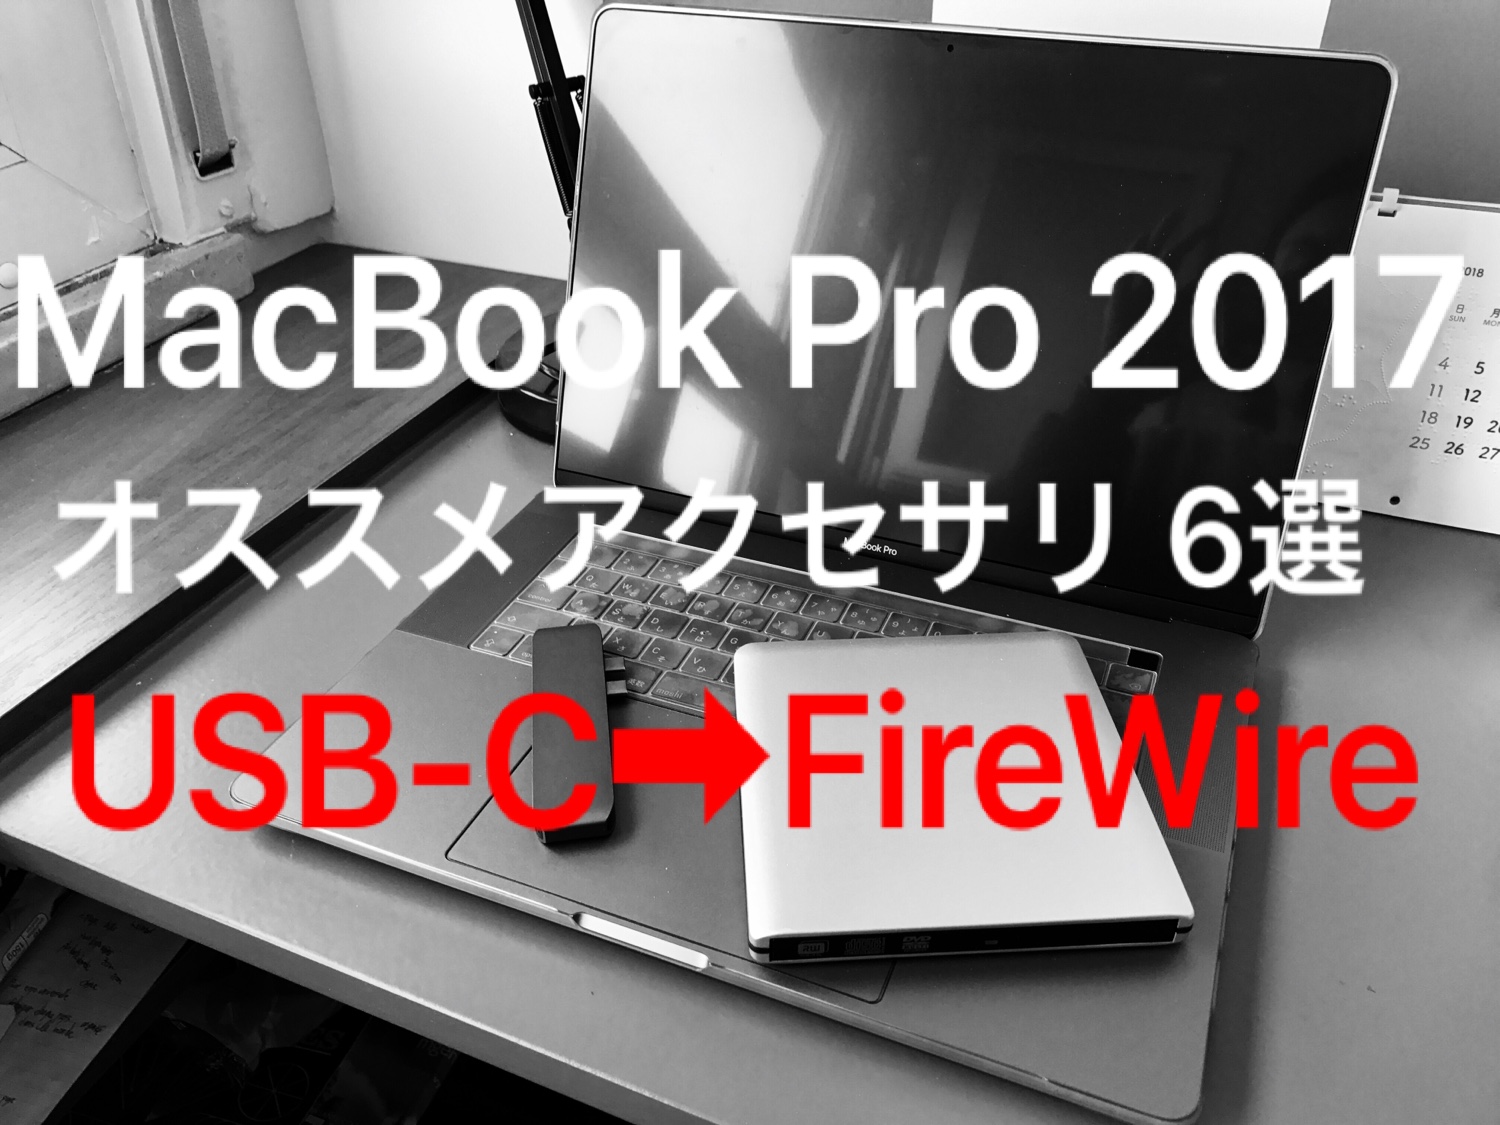 【MacBook Pro 2016,2017,2018,2019】USB-C FireWire 変換のやり方【周辺アクセサリ 6選】